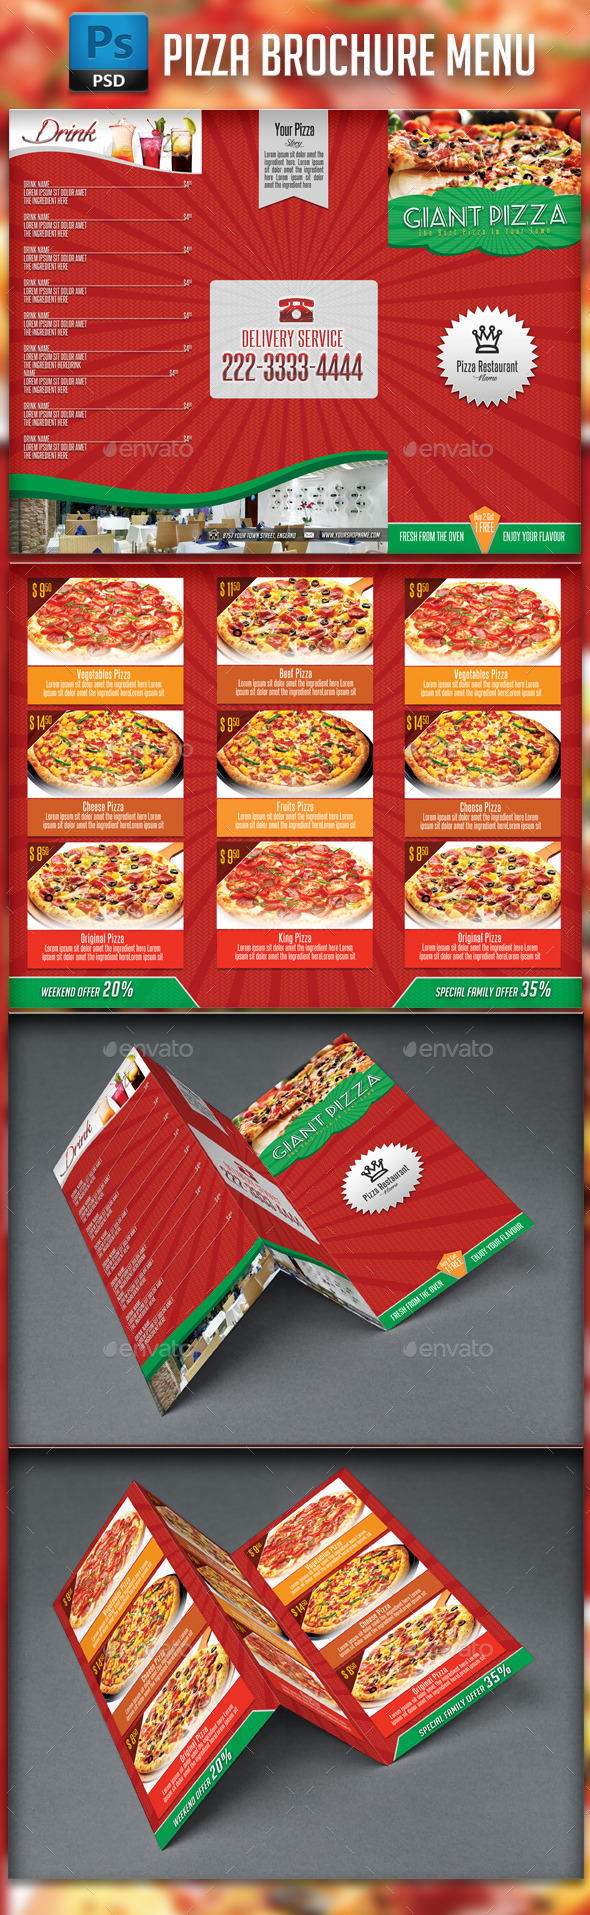 Pizza Menu Brochure Template